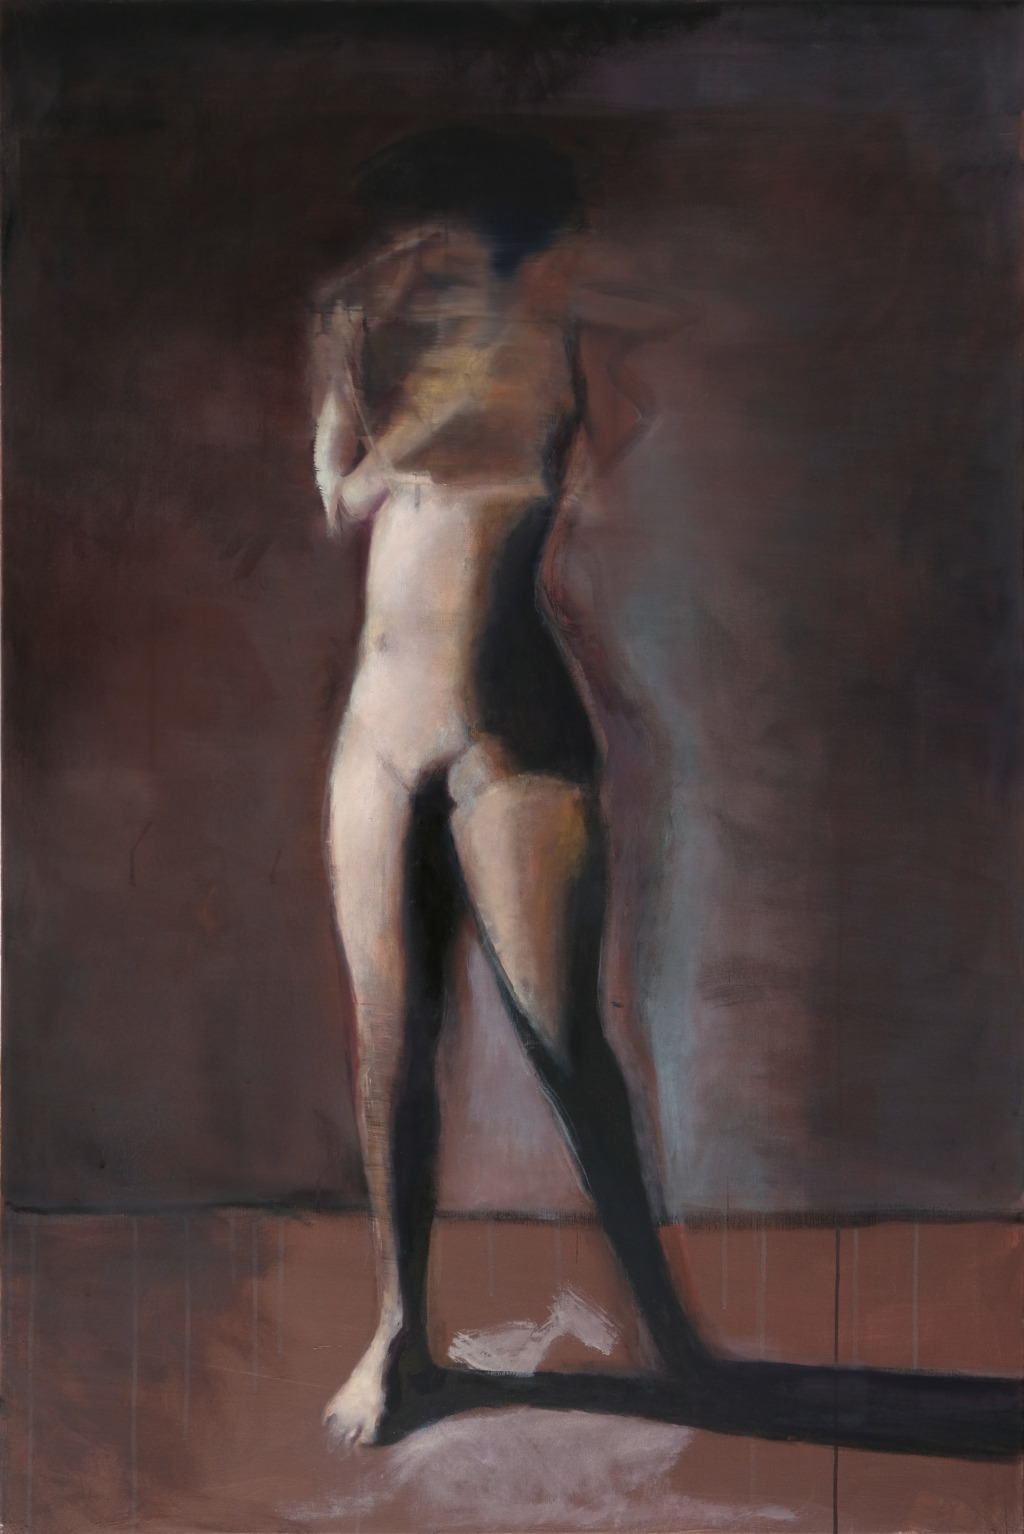 Andrea Muheim, Turn Around, 2021
Oil on canvas
150 x 100 cm